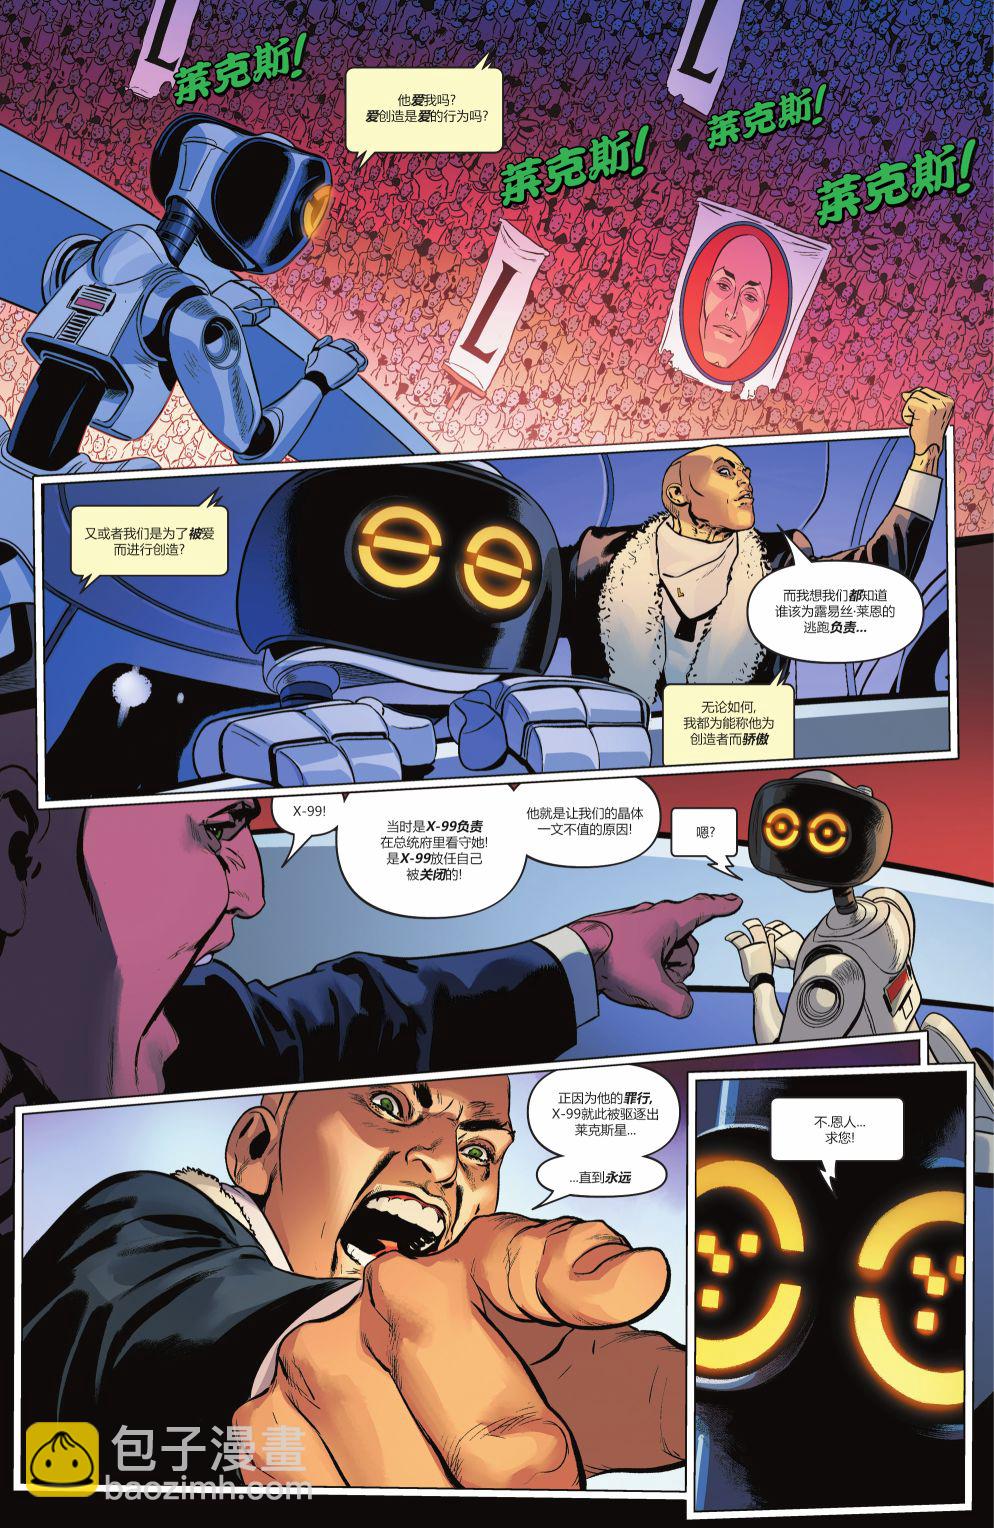 DC未來態 - 超人大戰霸王萊克斯#3 - 2